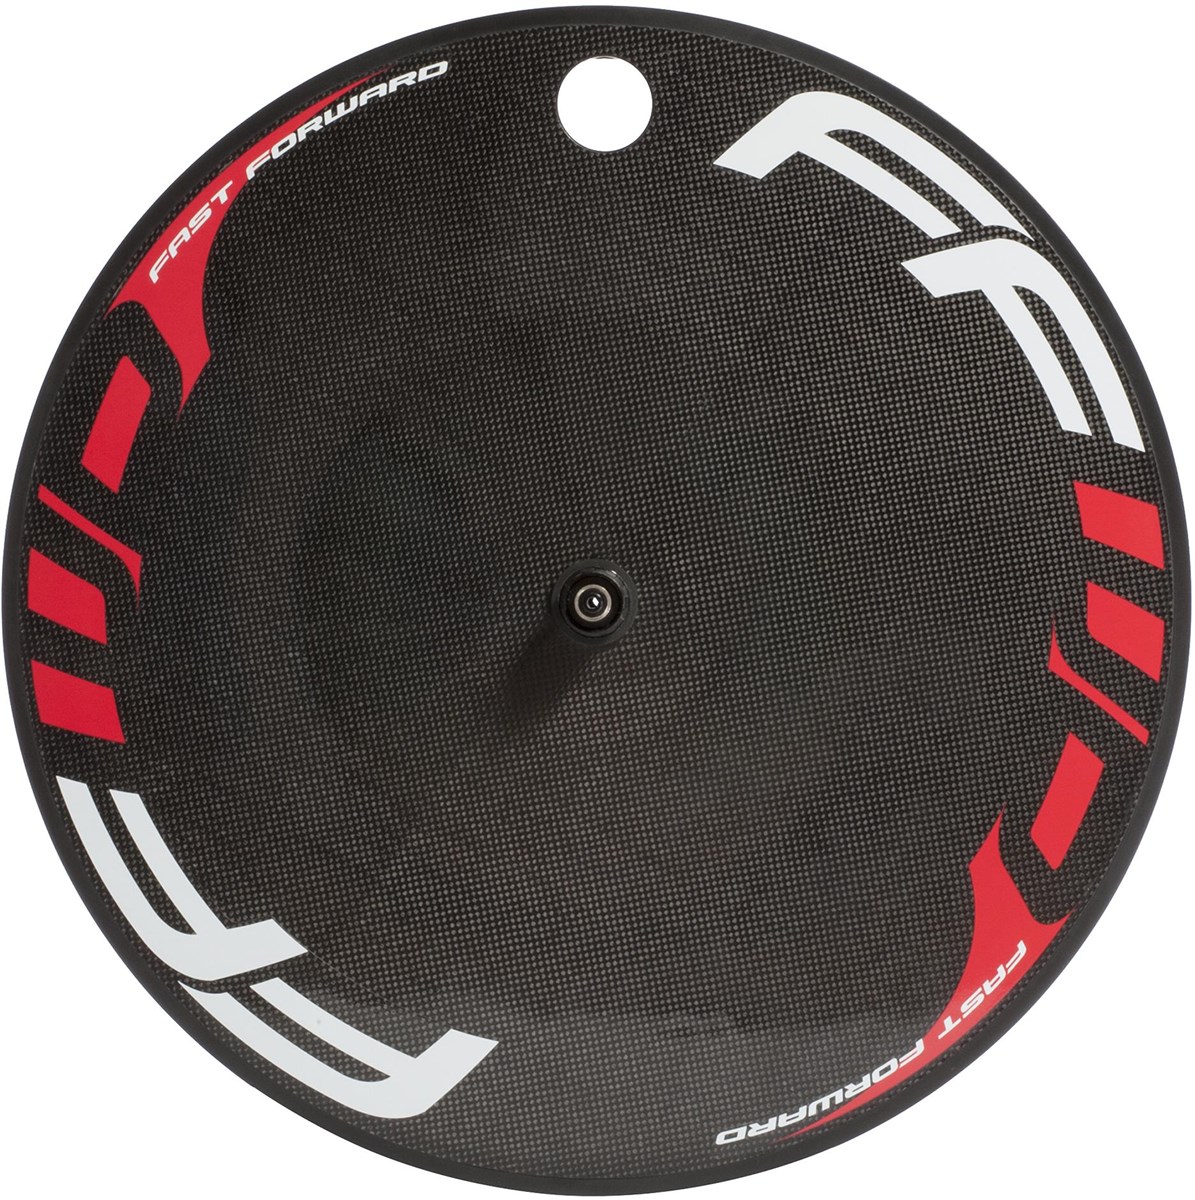 Fast Forward Disc Tubular Wheels product image